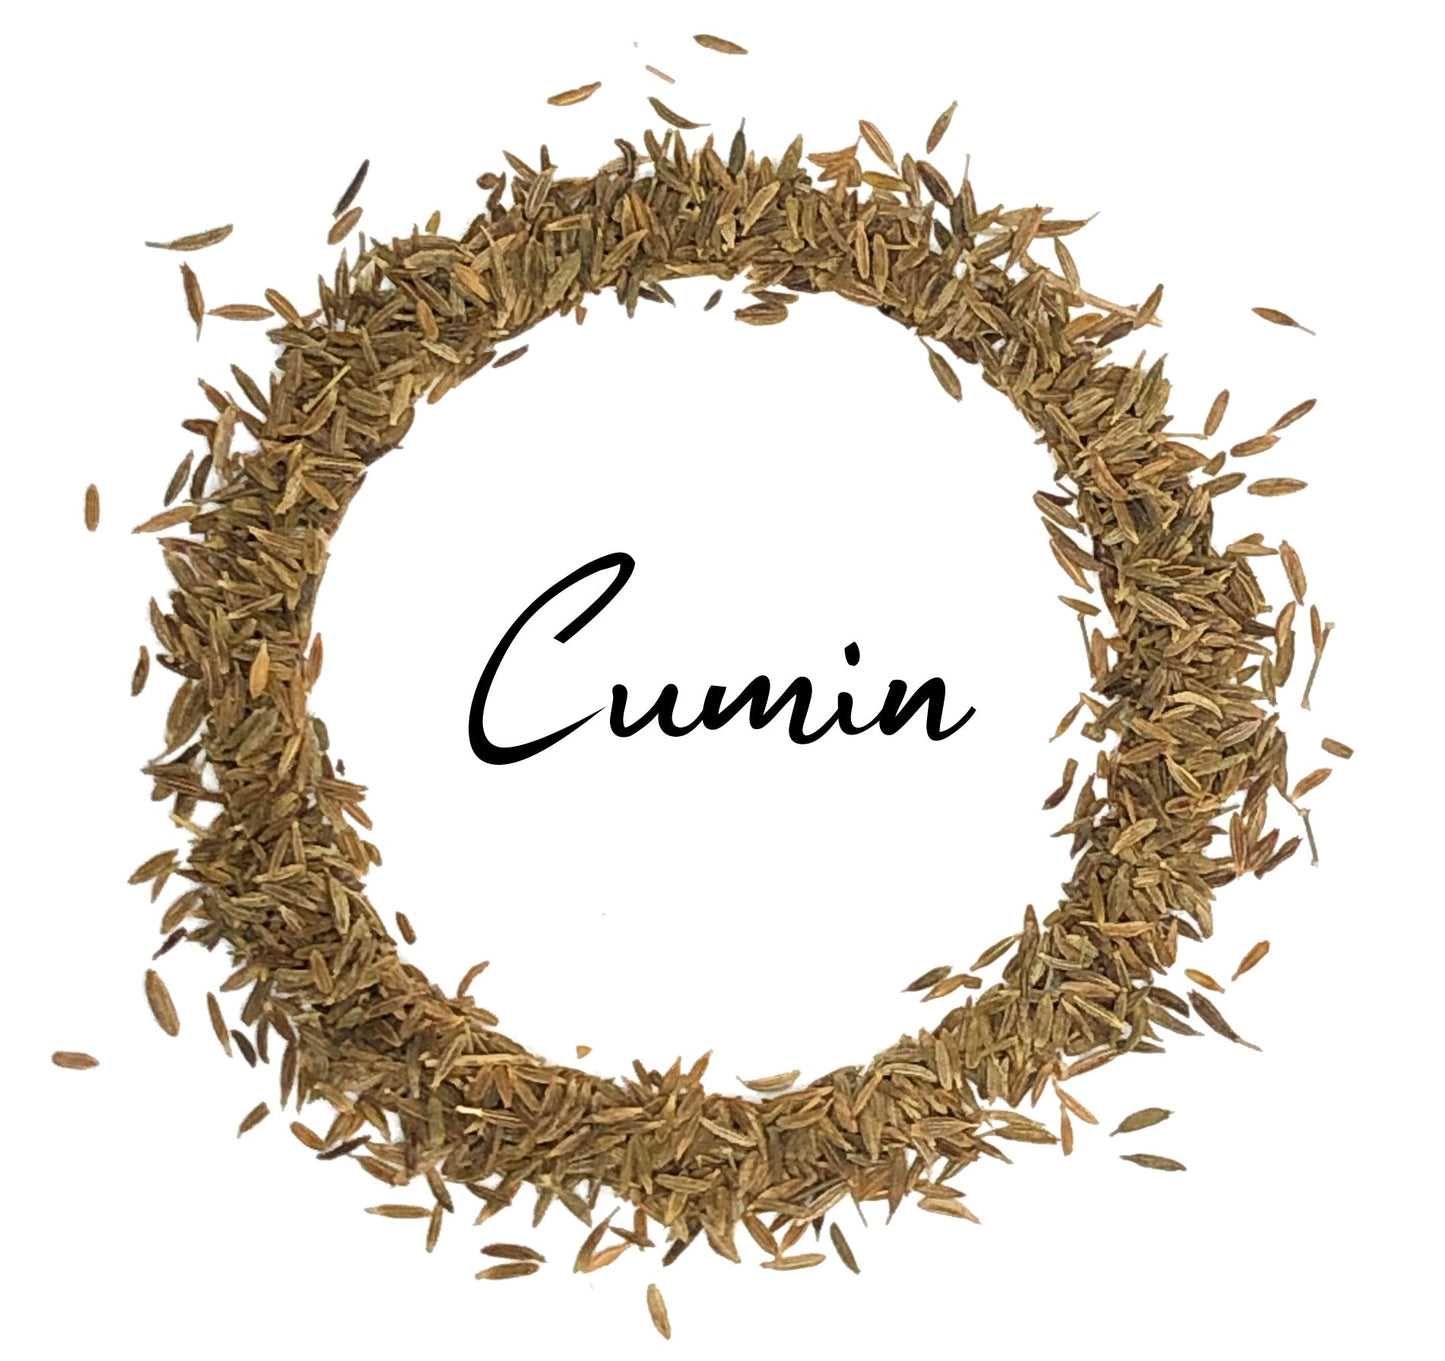 Wholesale Spices & Herbs - Cumin Seed Whole, Organic 2.6oz(75g) Jar